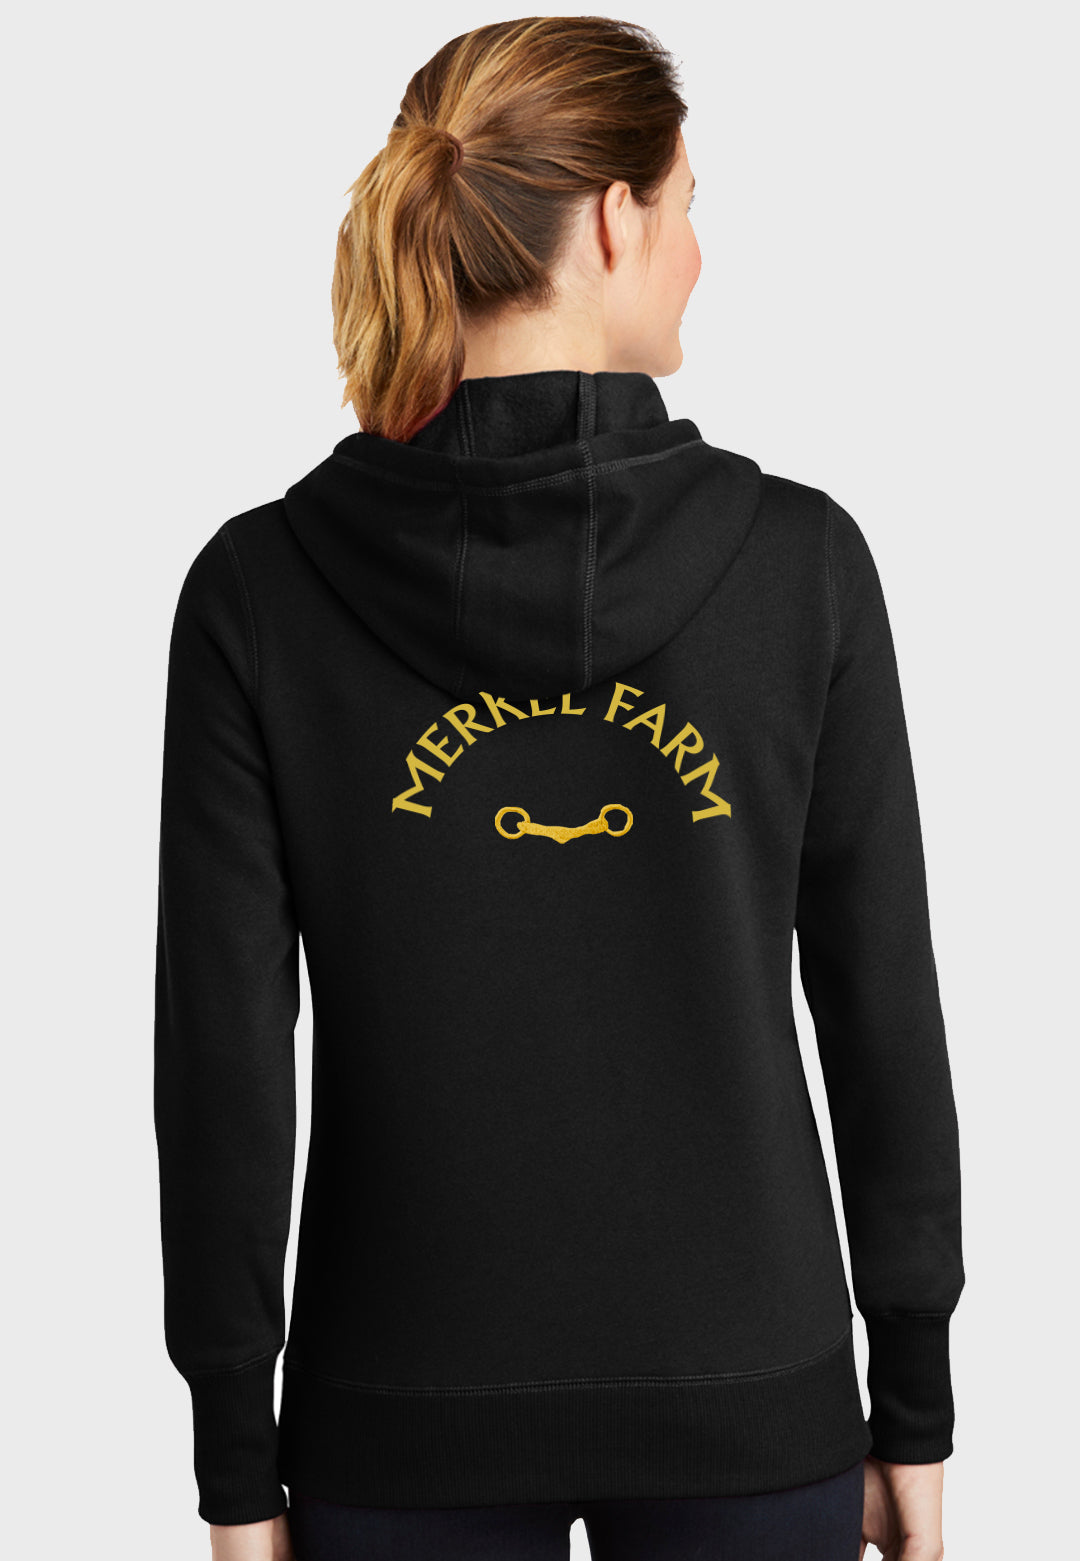 Merkel Farm Equestrian Center Sport-Tek® Ladies Pullover Hooded Sweatshirt - Black